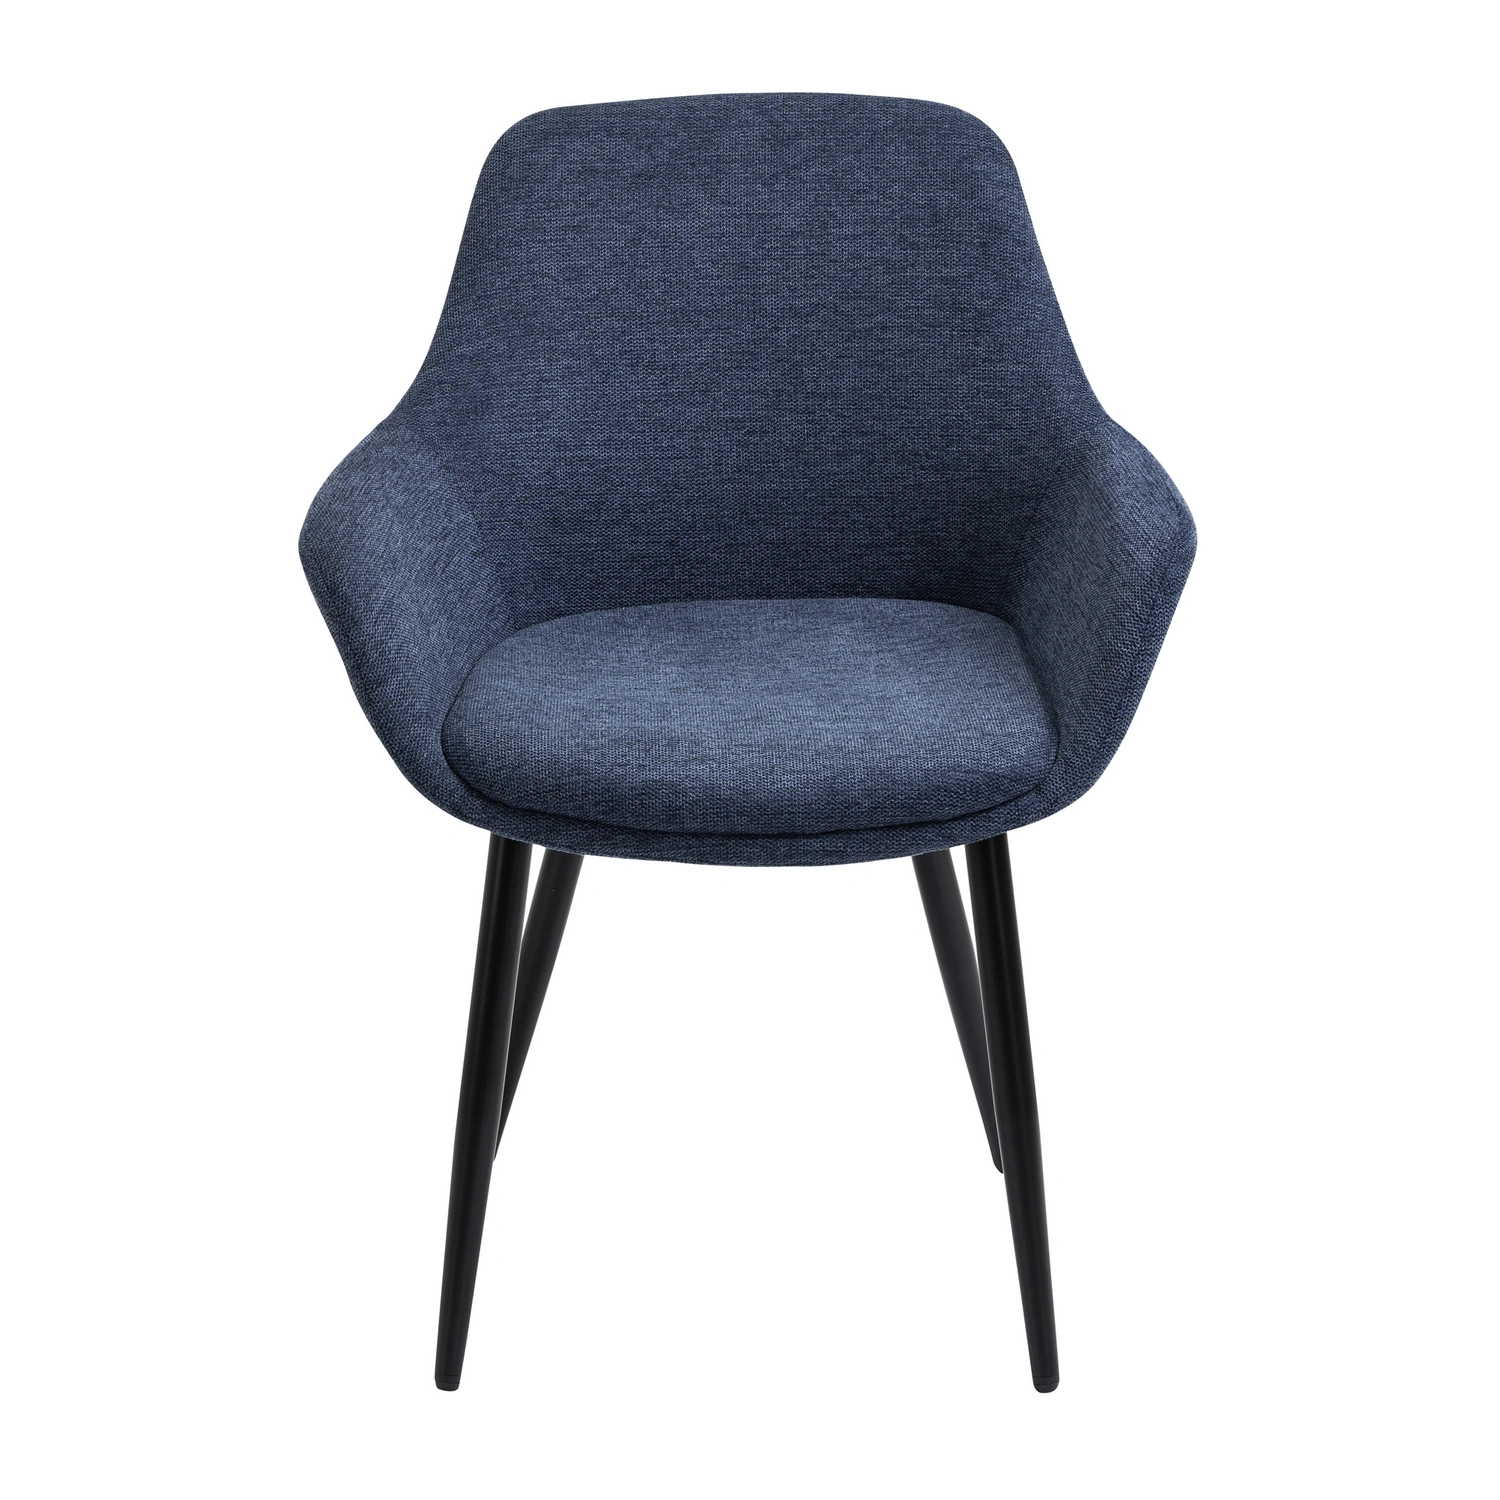 SalesFever Stuhl, Höhe: 2 cm, stk dunkelblau/schwarz, 86